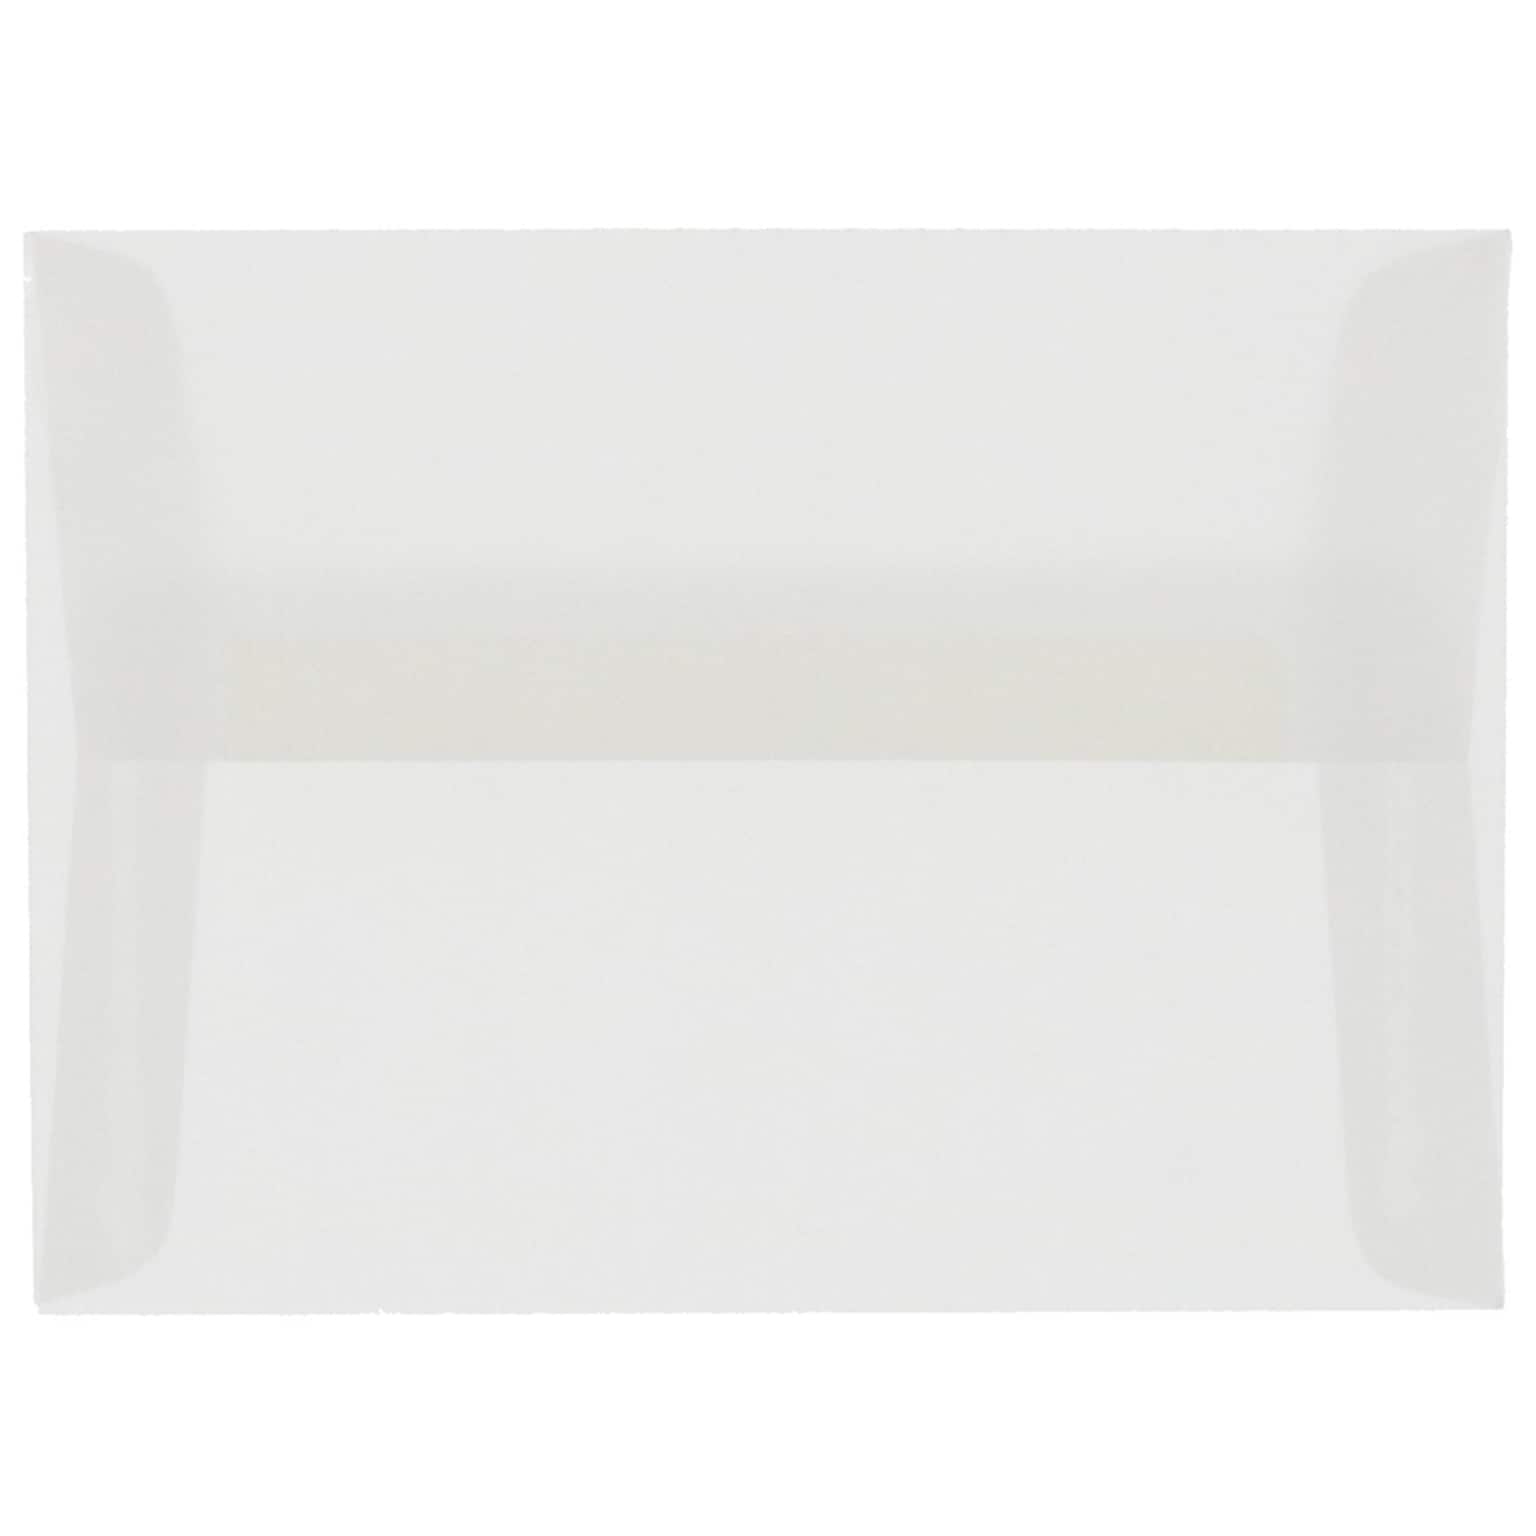 JAM Paper A7 Translucent Vellum Invitation Envelopes, 5.25 x 7.25, Clear, 50/Pack (2851295I)